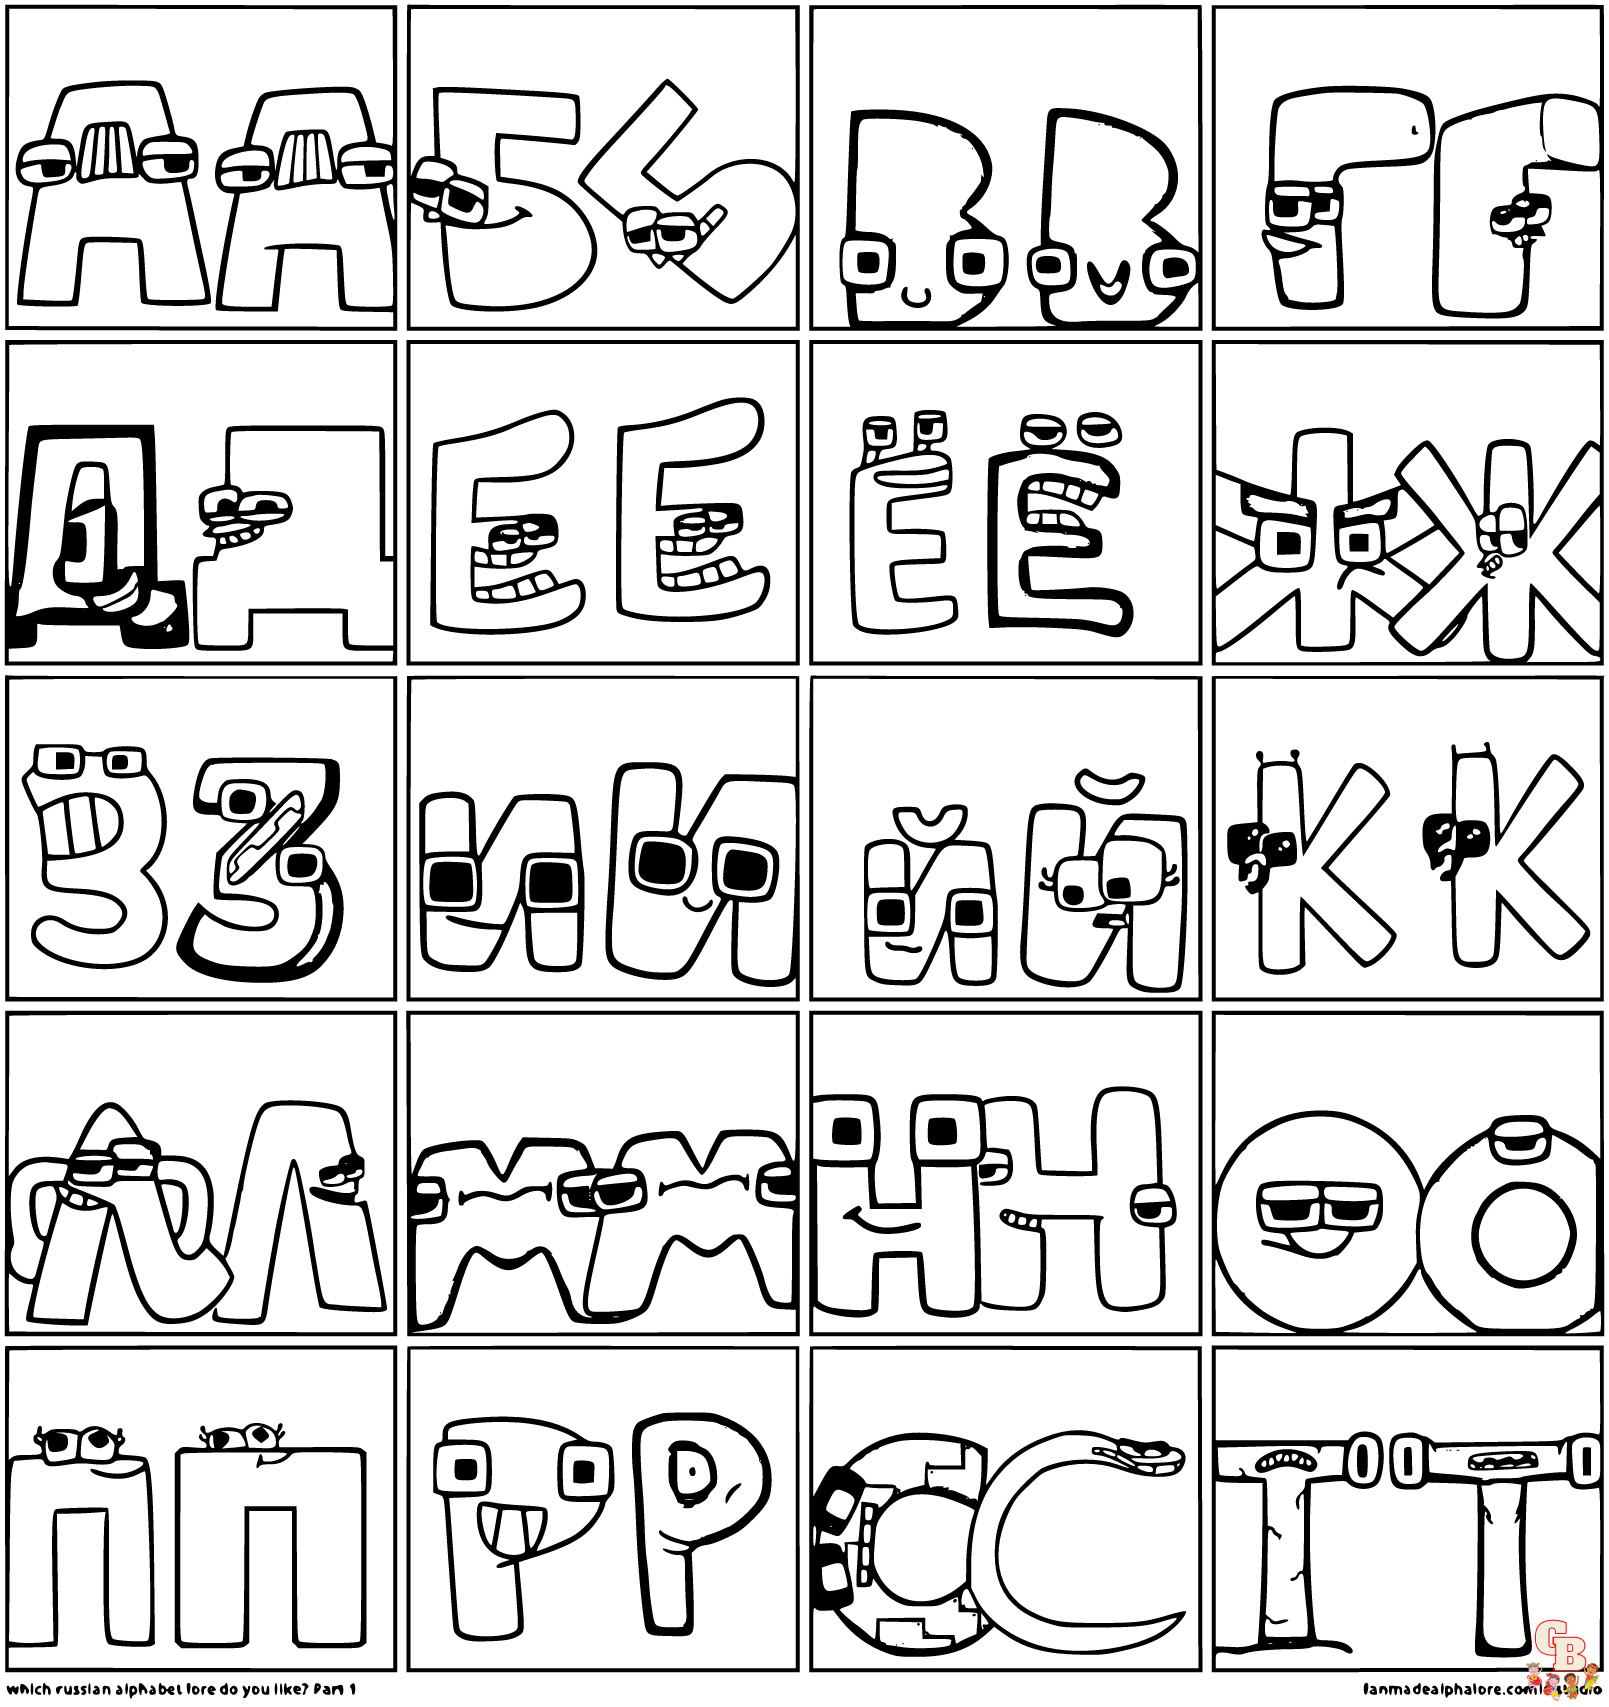 Alphabet Lore Characters Coloring Bundle PNG Digital (Instant